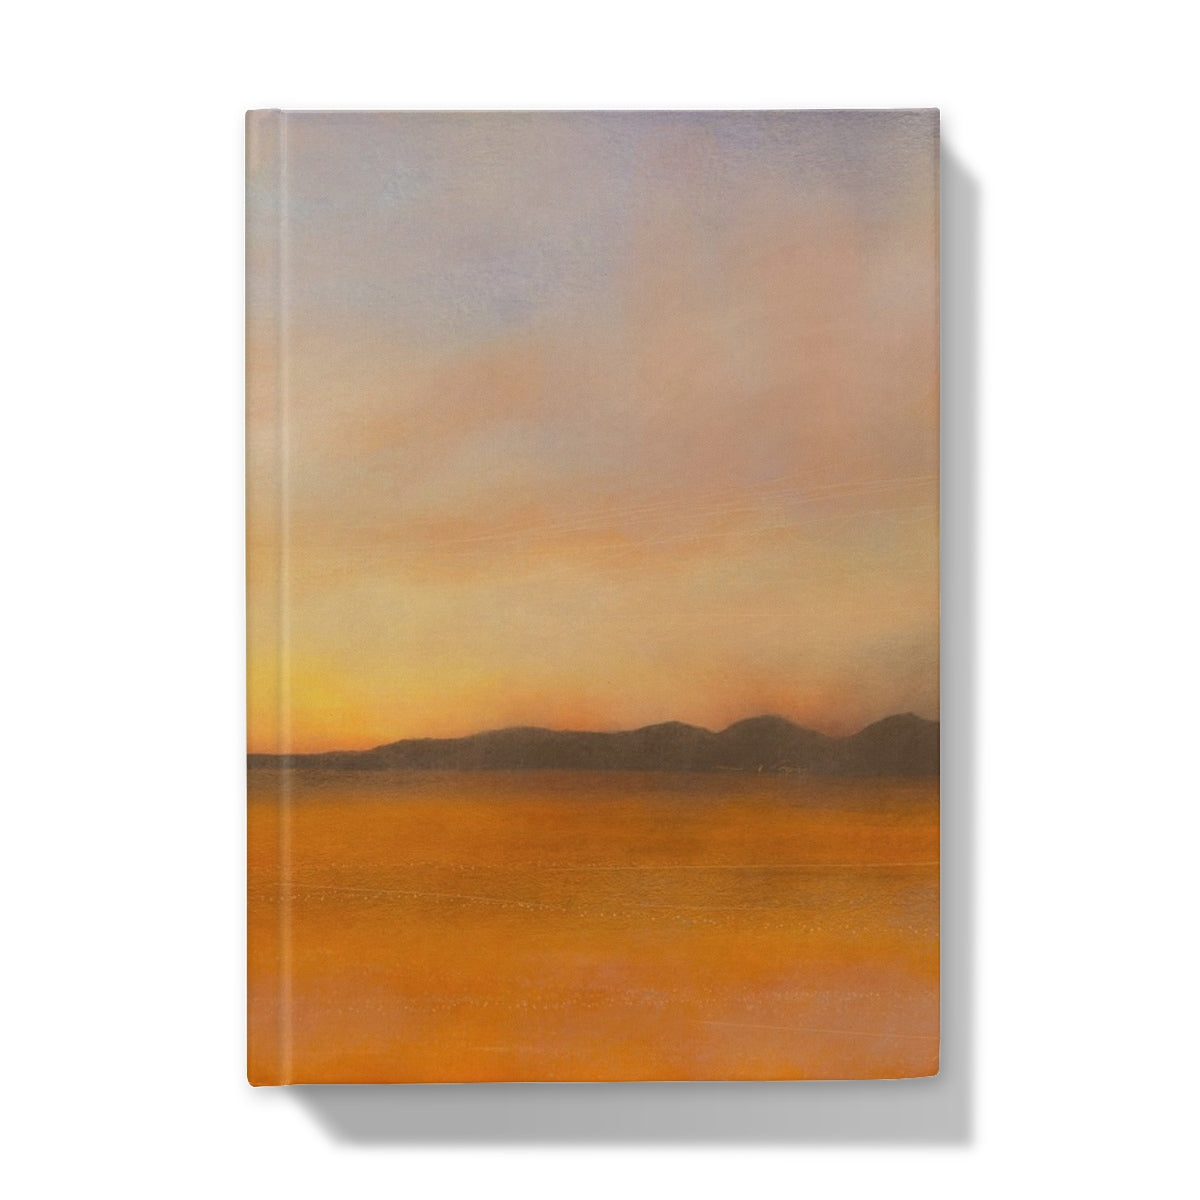 Islay Dawn Art Gifts Hardback Journal-Journals & Notebooks-Hebridean Islands Art Gallery-5"x7"-Plain-Paintings, Prints, Homeware, Art Gifts From Scotland By Scottish Artist Kevin Hunter